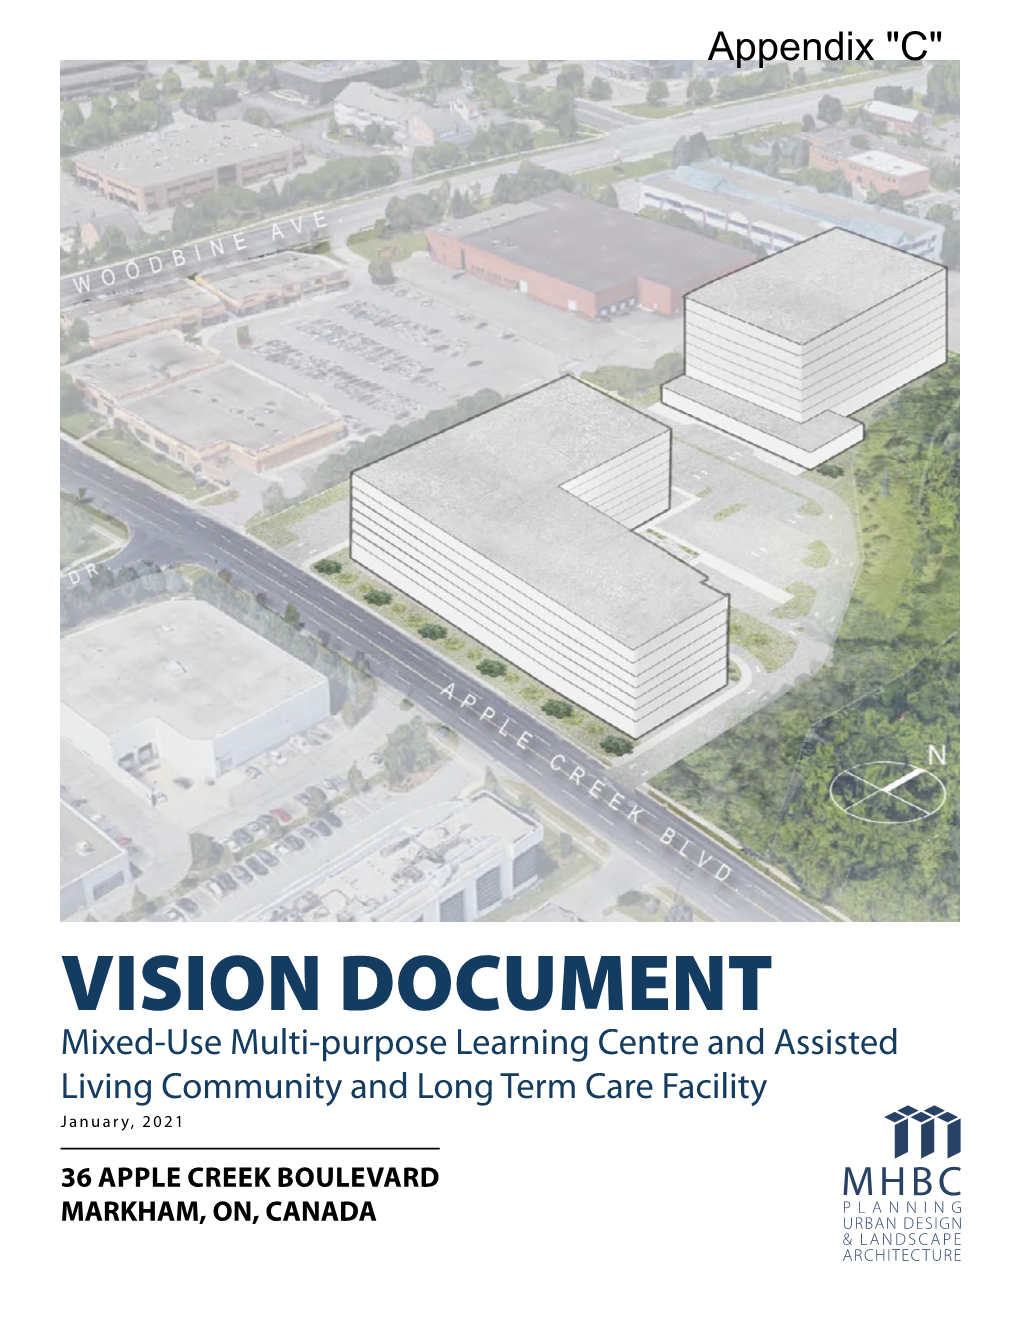 Vision Document 238 Broadview Avenue Tel (416) 504-6054 36 Apple Creek Blvd